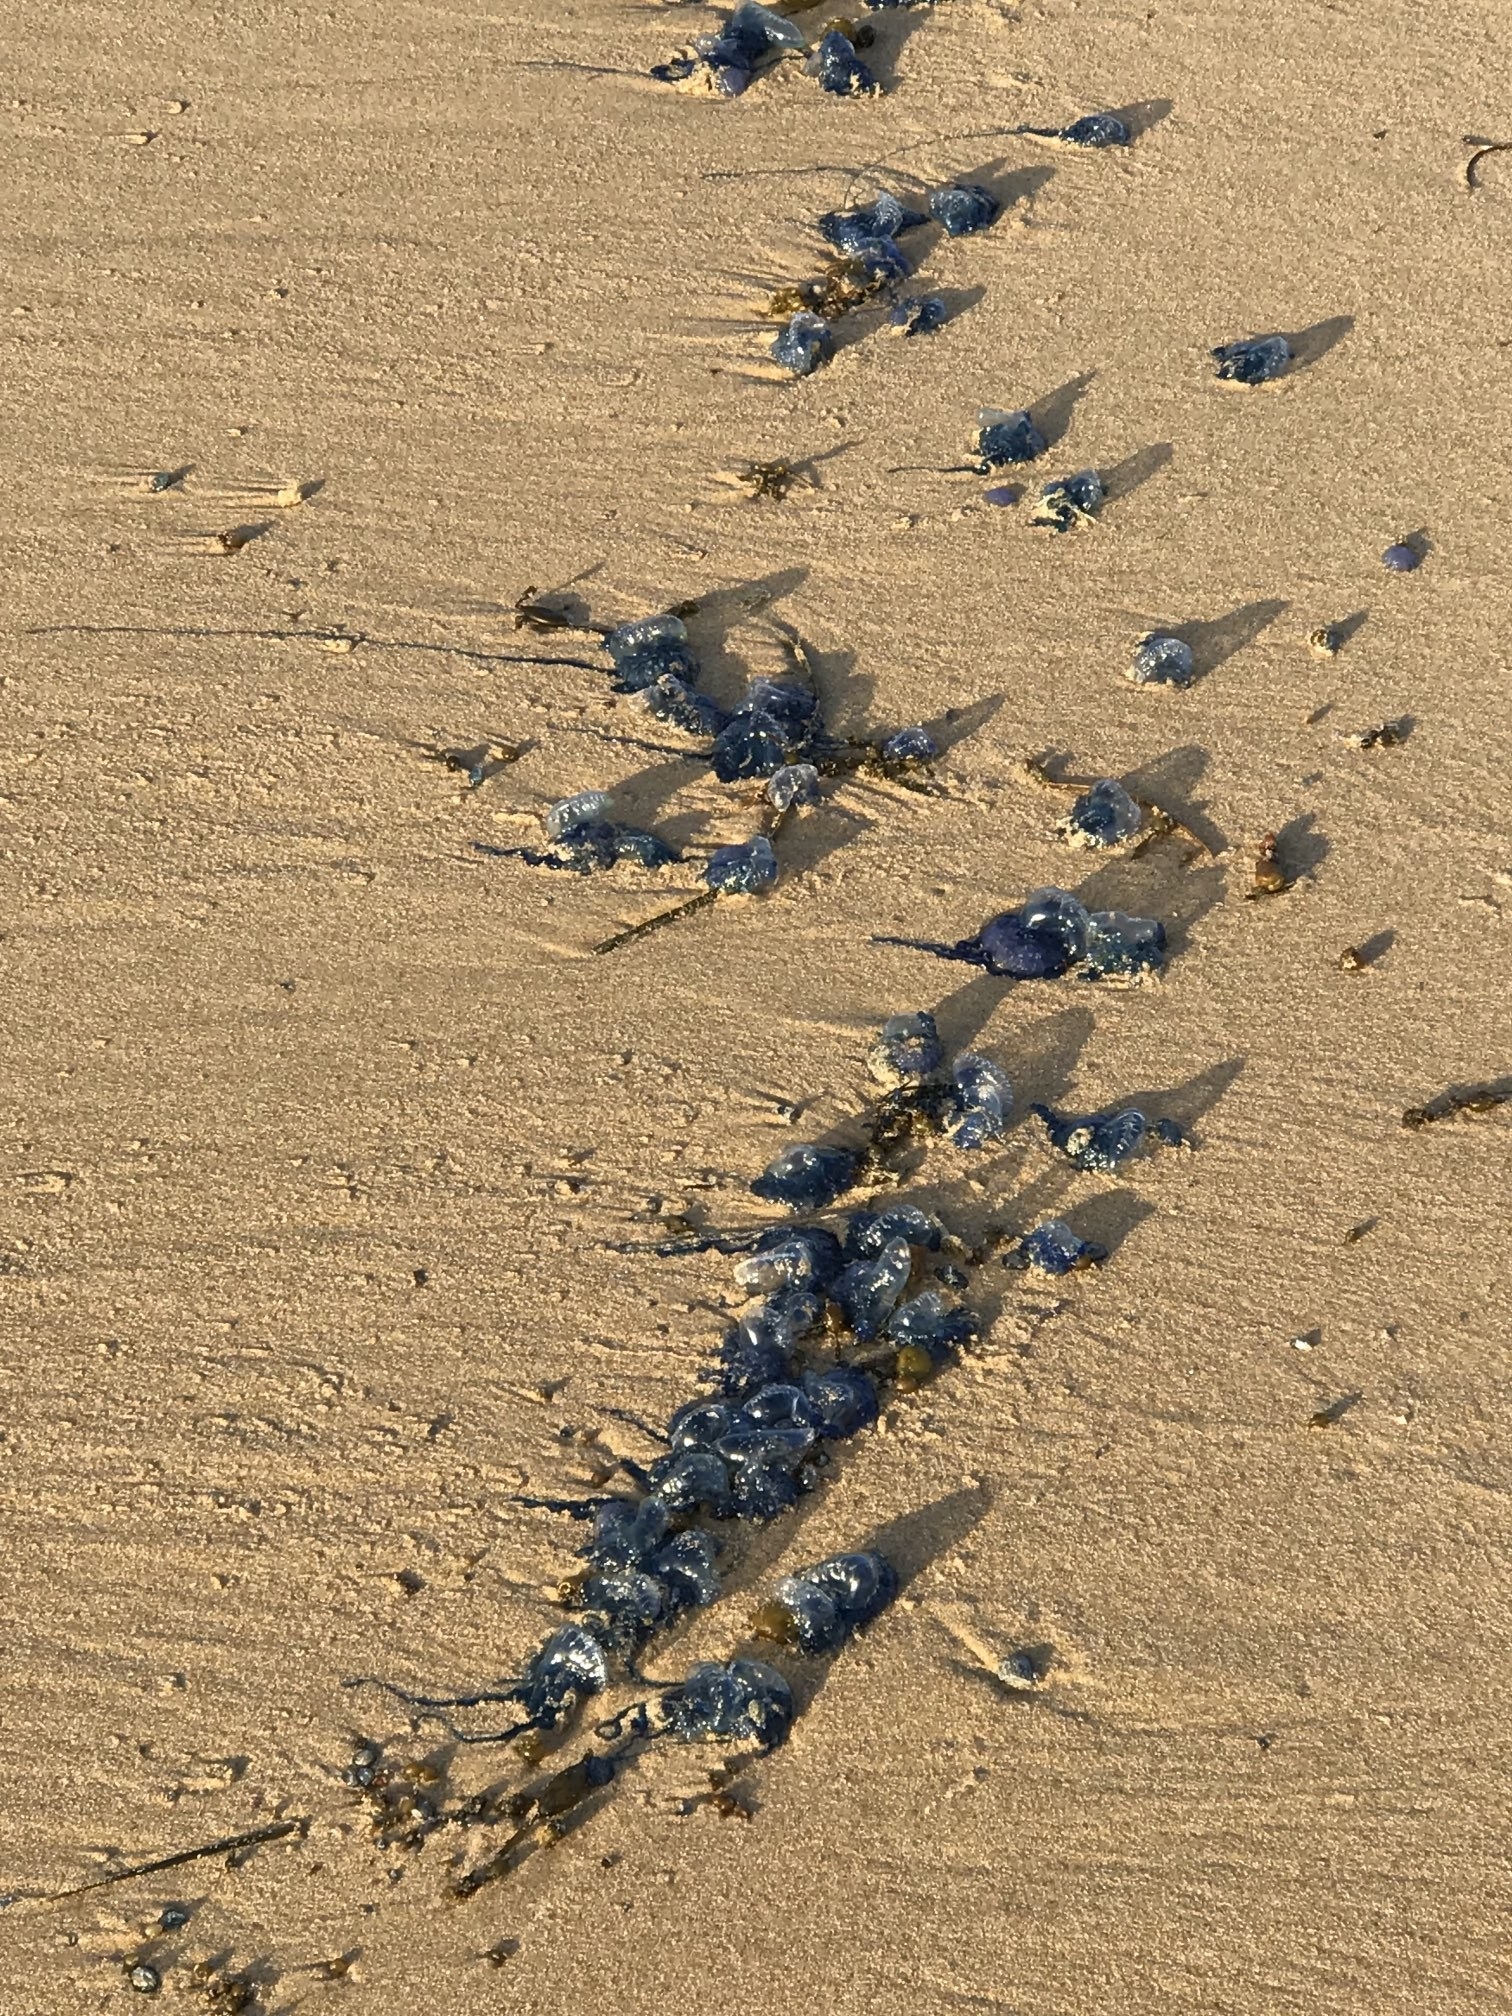 A huge clump of bluebottles on sand